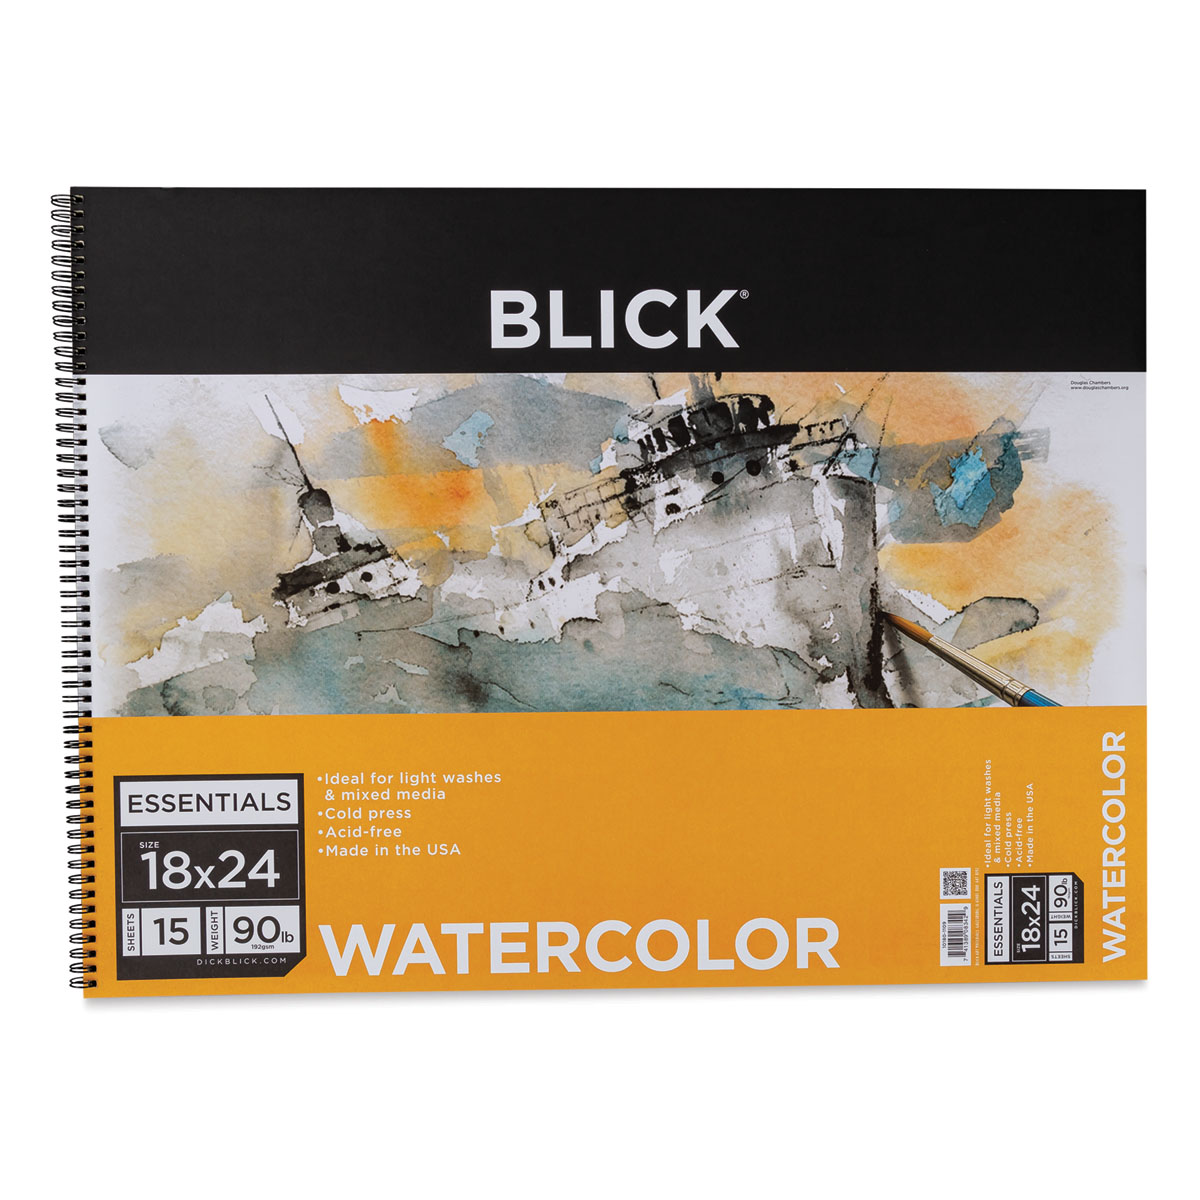 Blick Studio Watercolor Paper by Fabriano